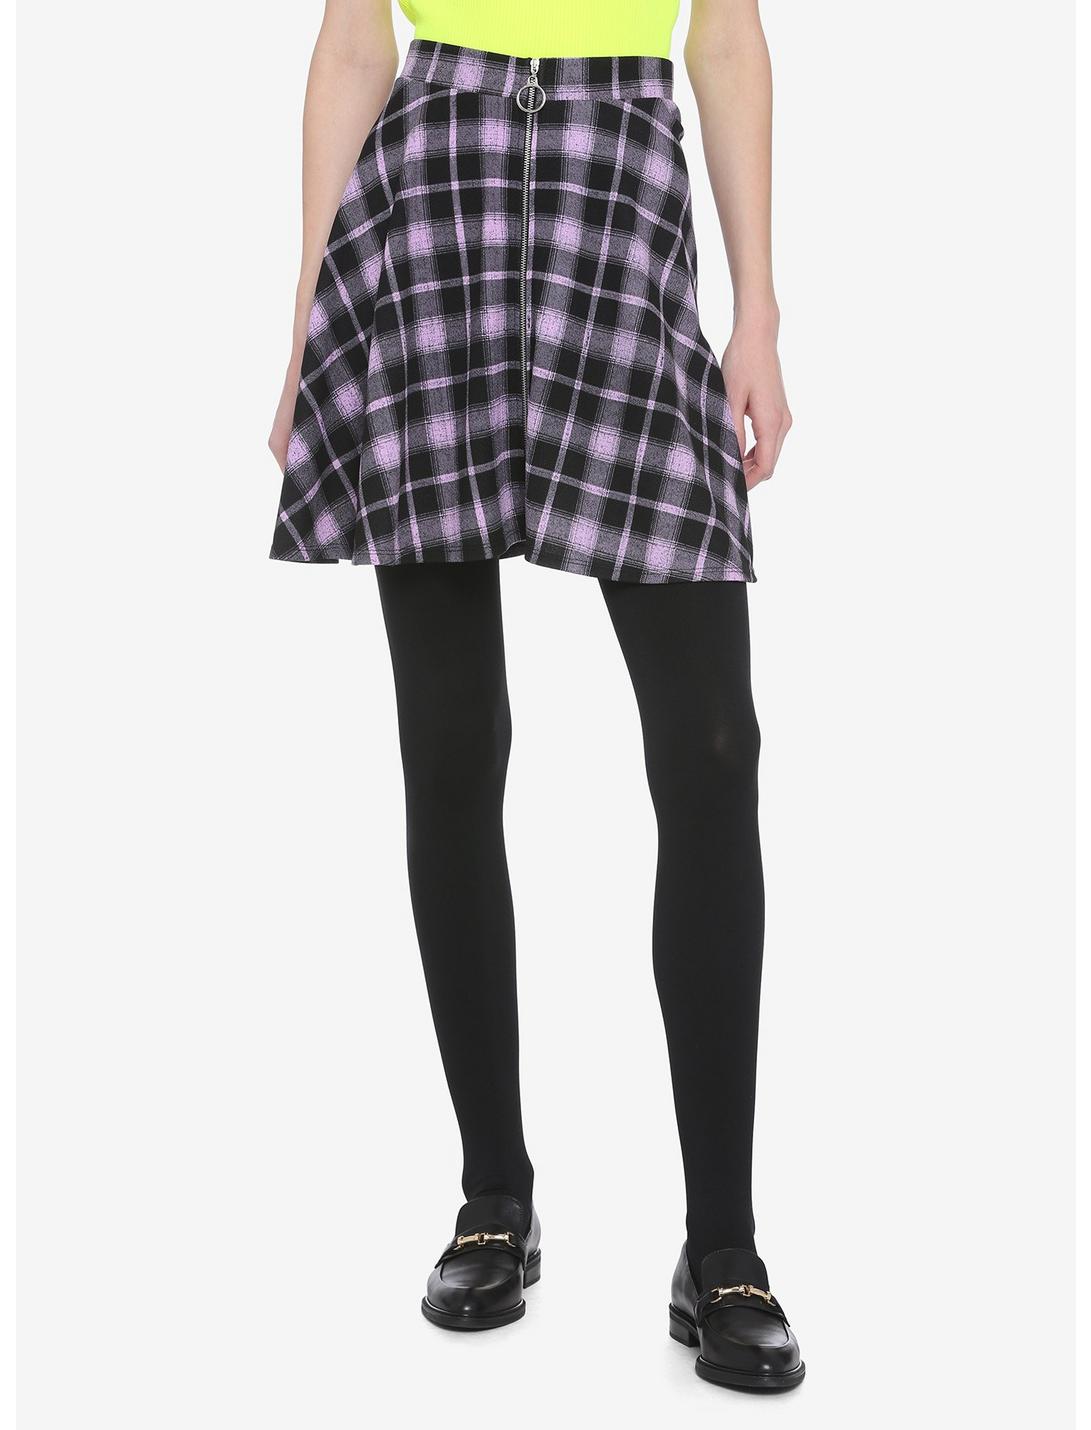 Black & Purple Plaid O-Ring Skater Skirt, LAVENDER, hi-res